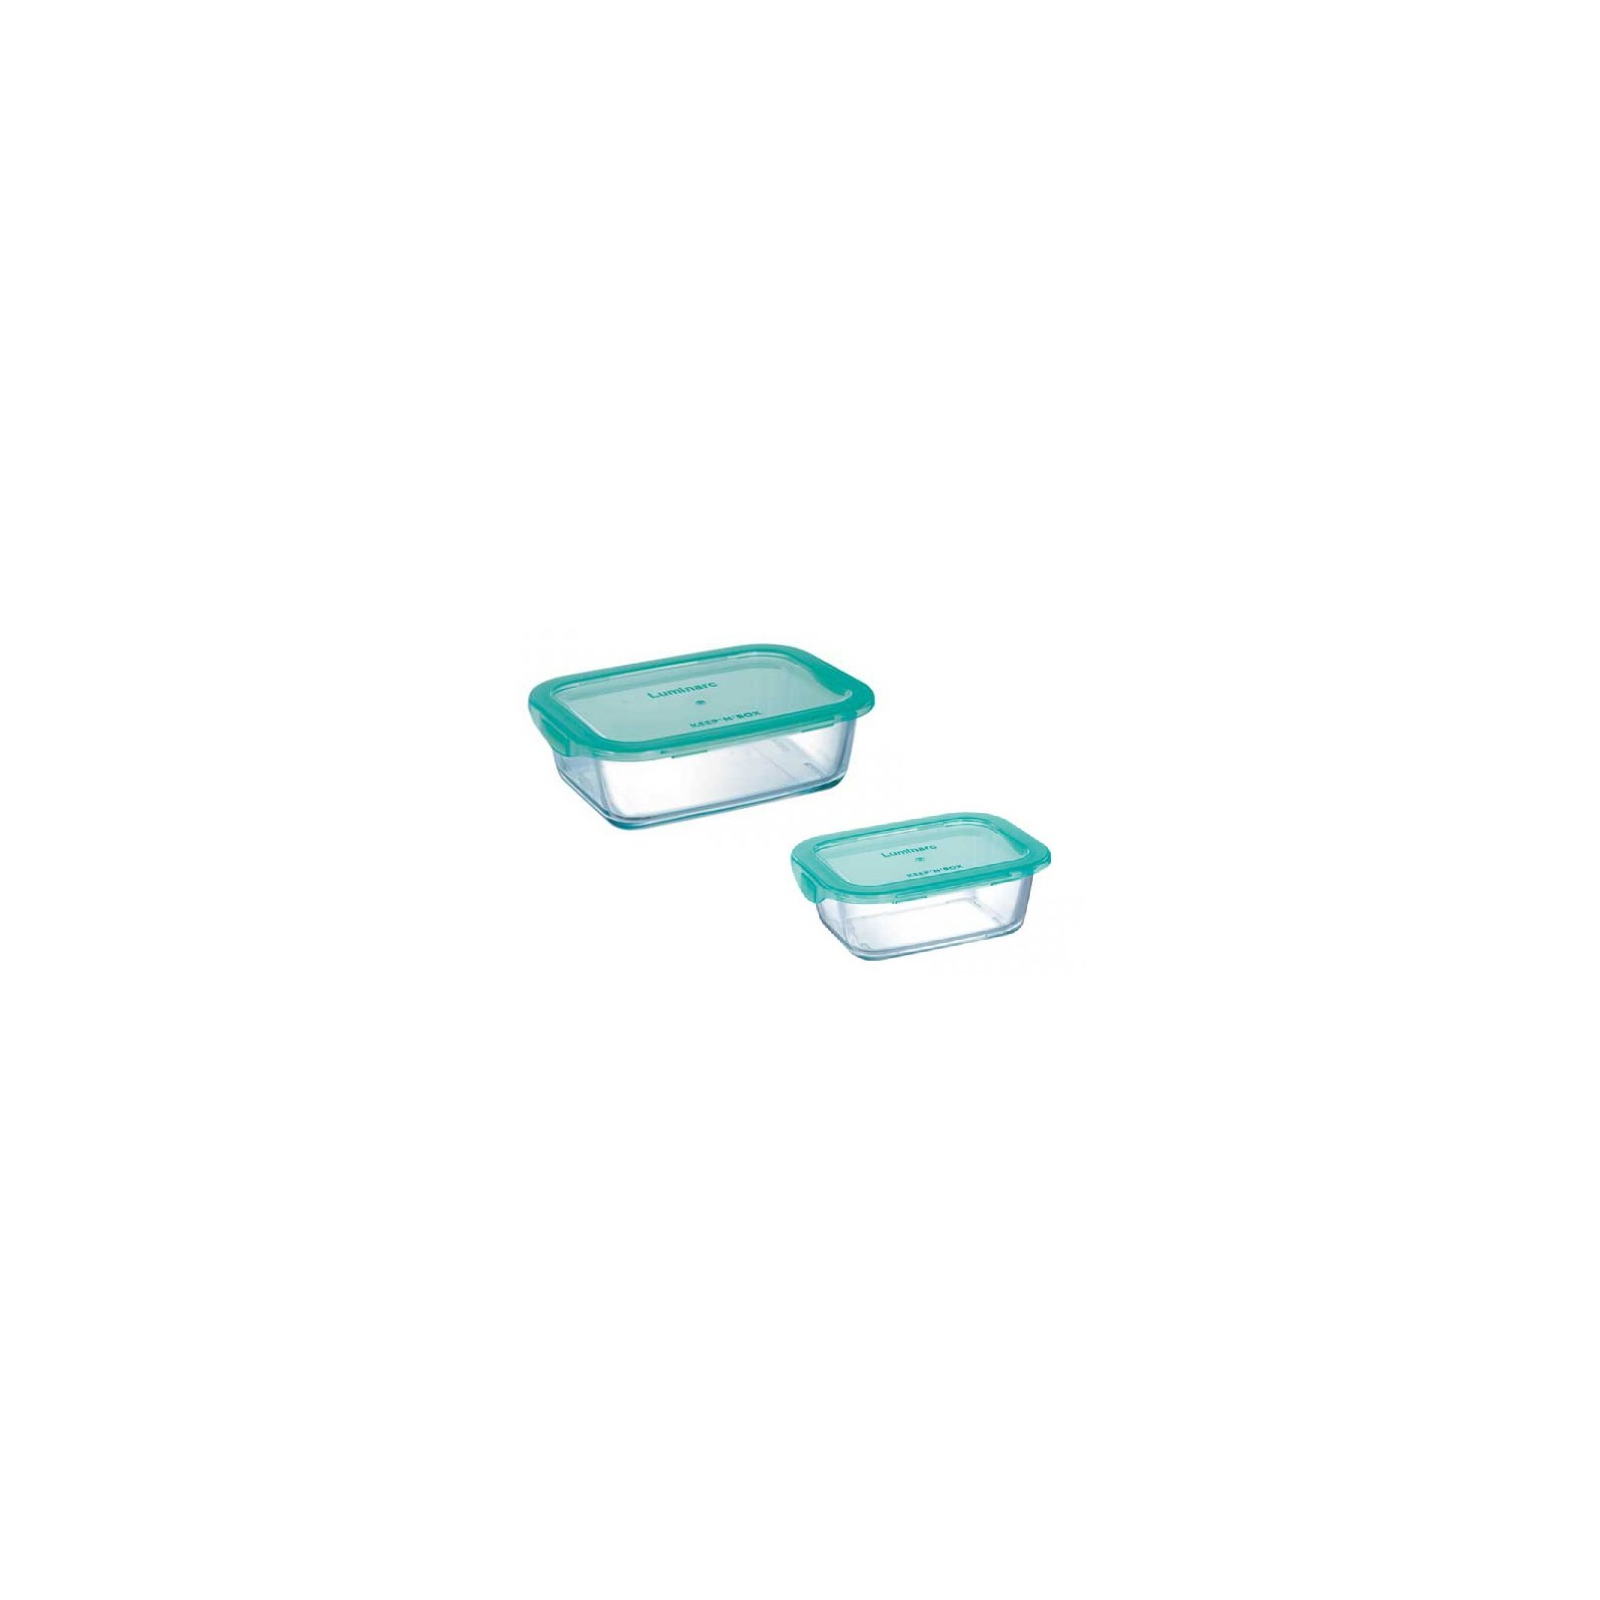 Пищевой контейнер Luminarc Keep'n Box Lagoon набор 2шт прямоуг. 380мл/820мл (P7643)